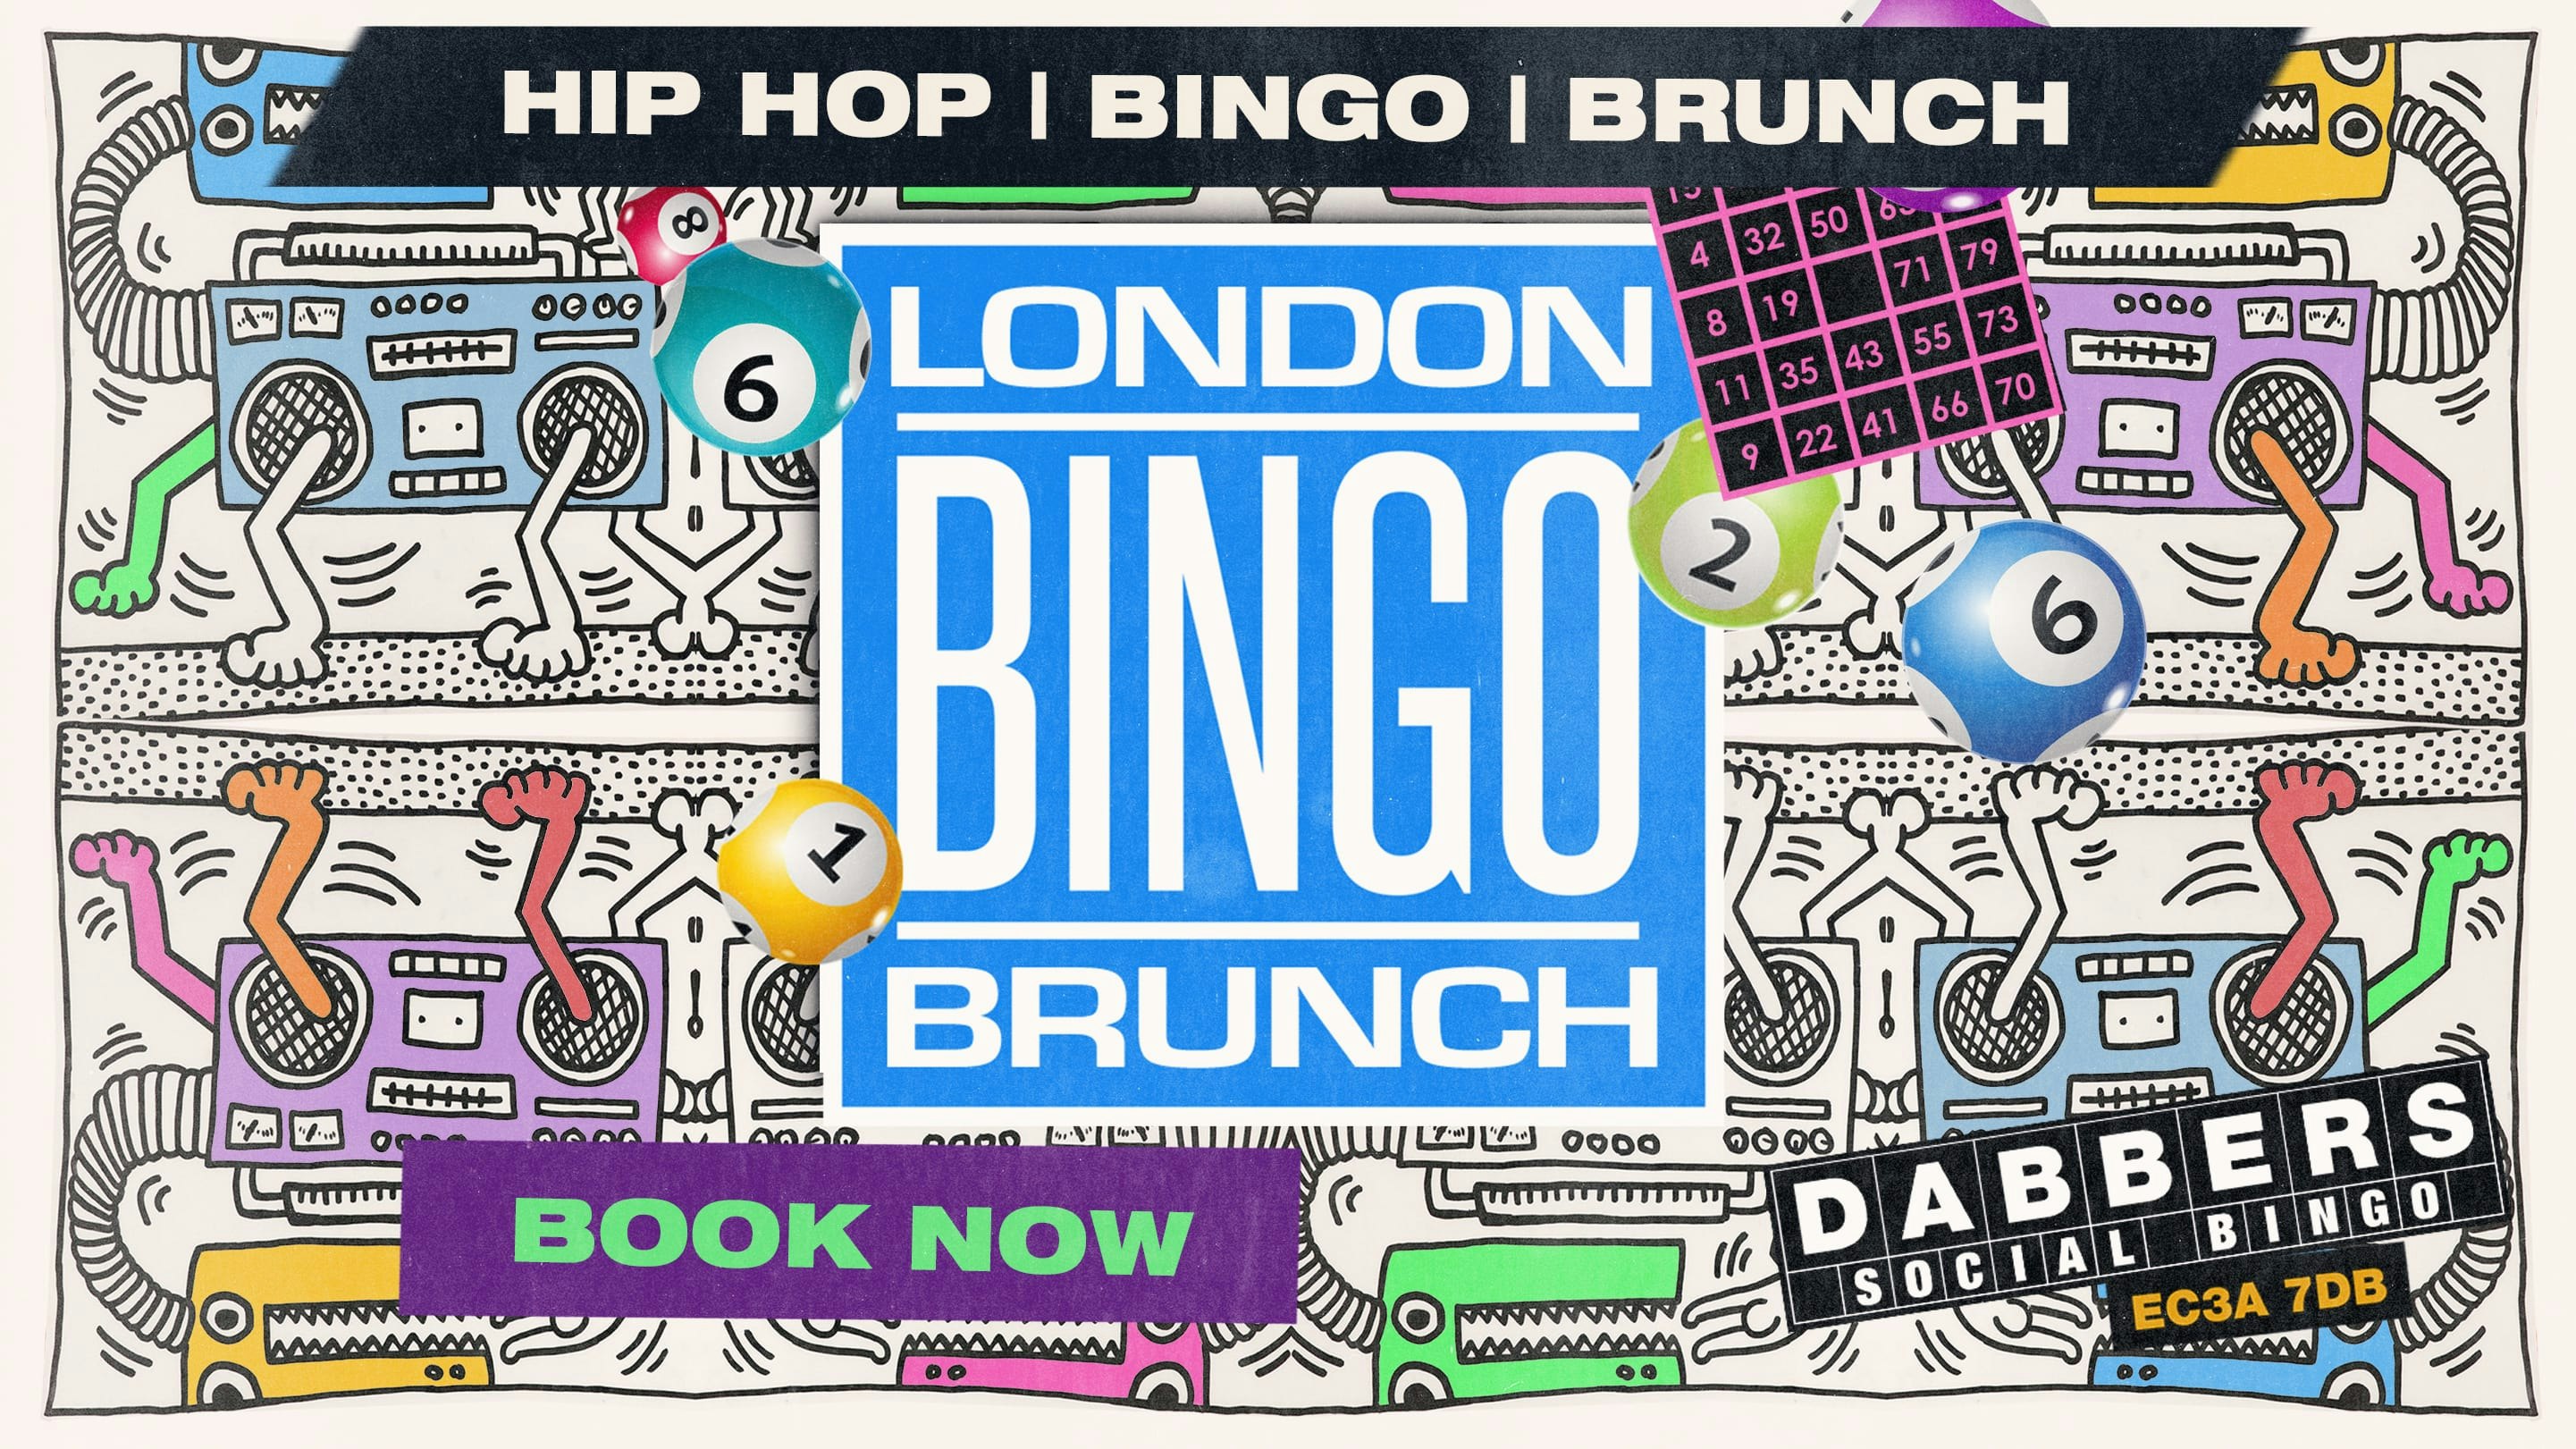 London Bingo Brunch: All Hip Hip x R&B Party